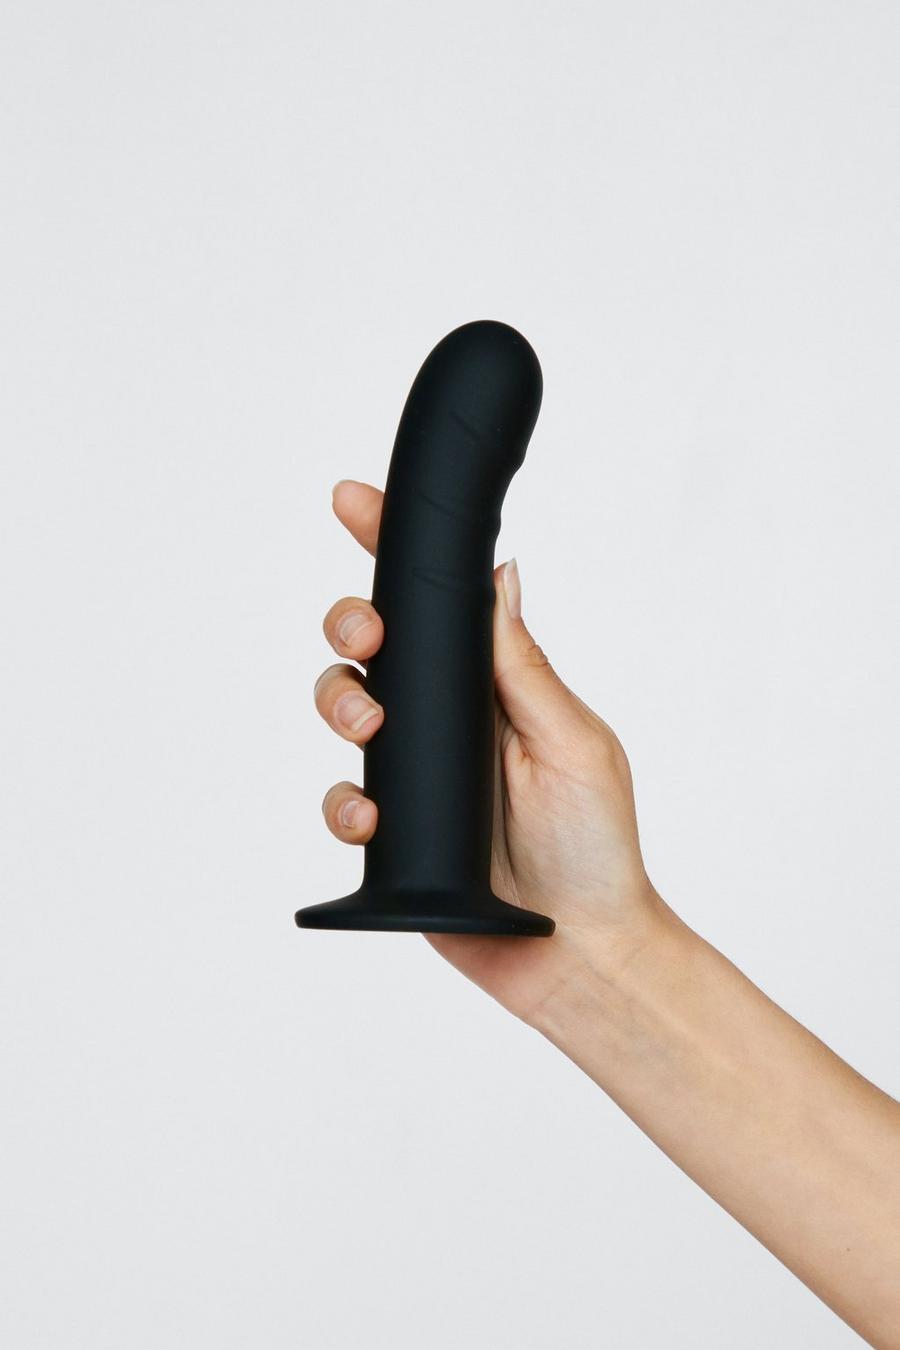 Large Dildo Sex Toy